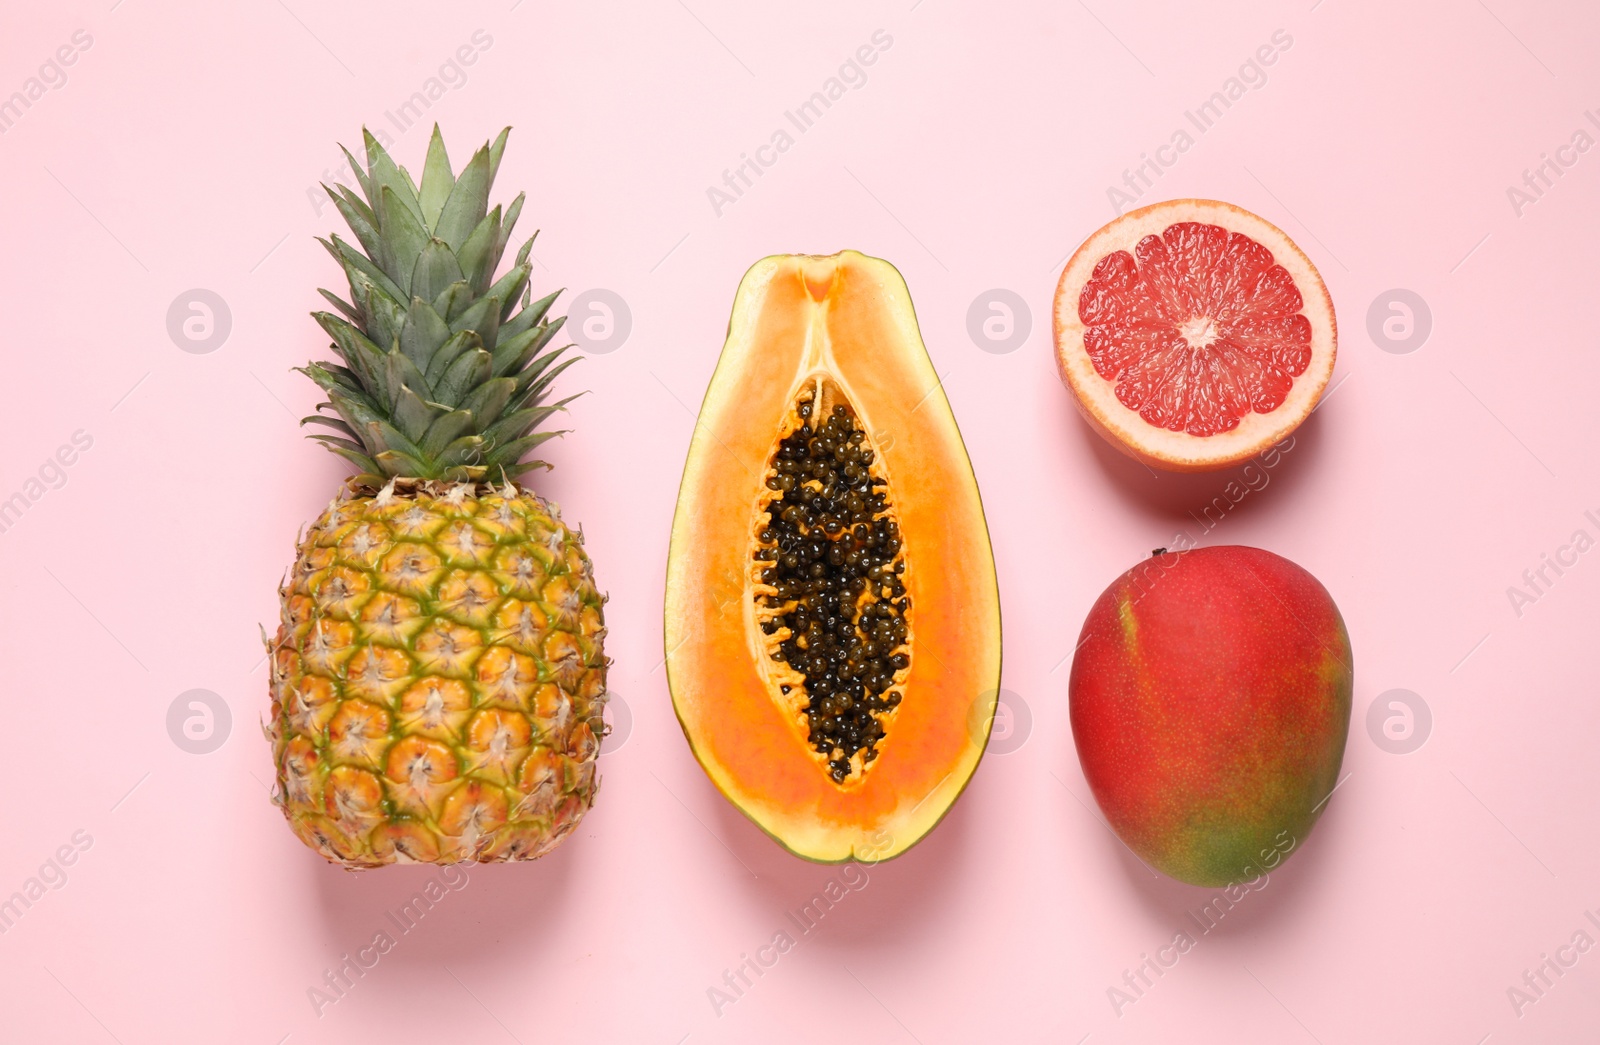 Photo of Fresh ripe papaya and other fruits on pink background, flat lay